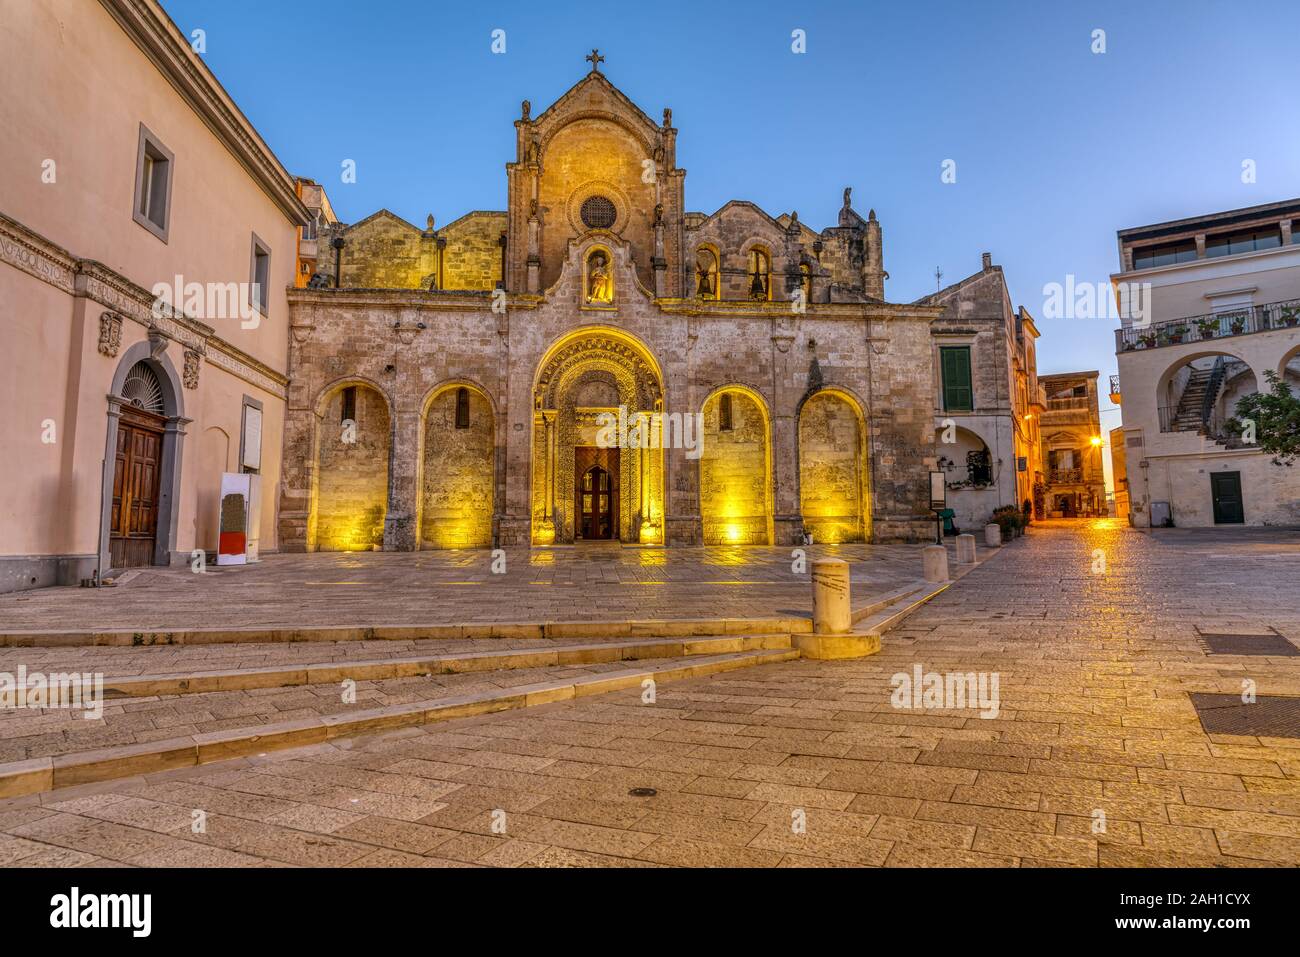 La iglesia de San Giovanni Battista en Matera, Italia, al amanecer Foto de stock